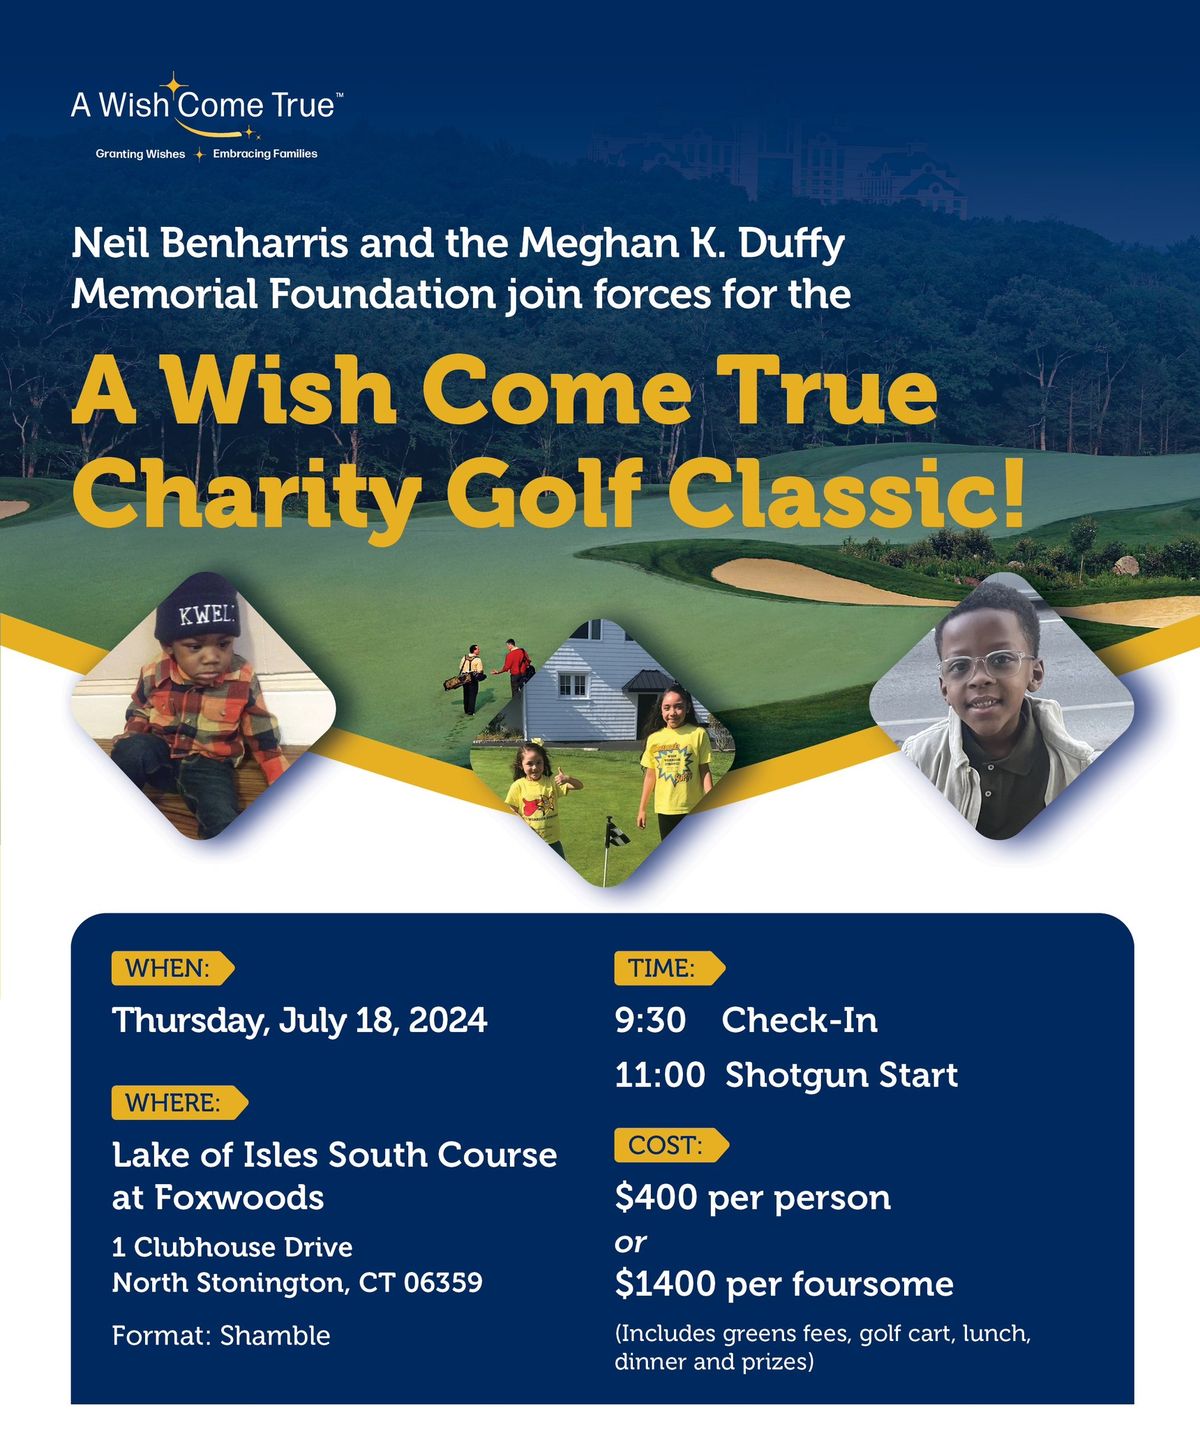 A Wish Come True Charity Golf Classic!